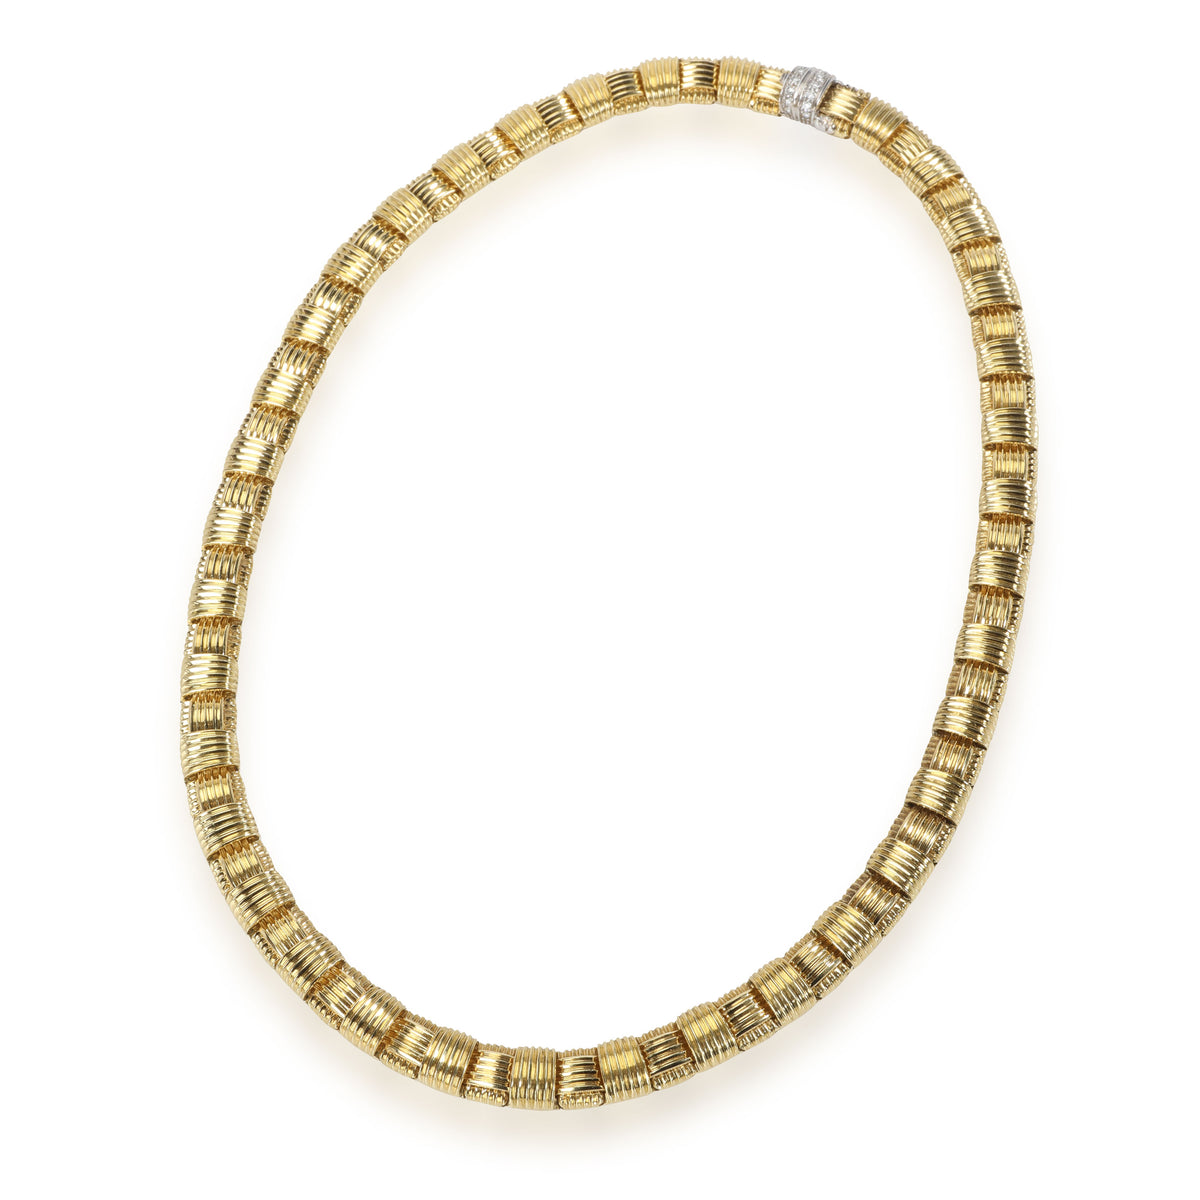 Roberto Coin Appasionata Diamond Necklace in 18K Yellow Gold 0.16 CTW